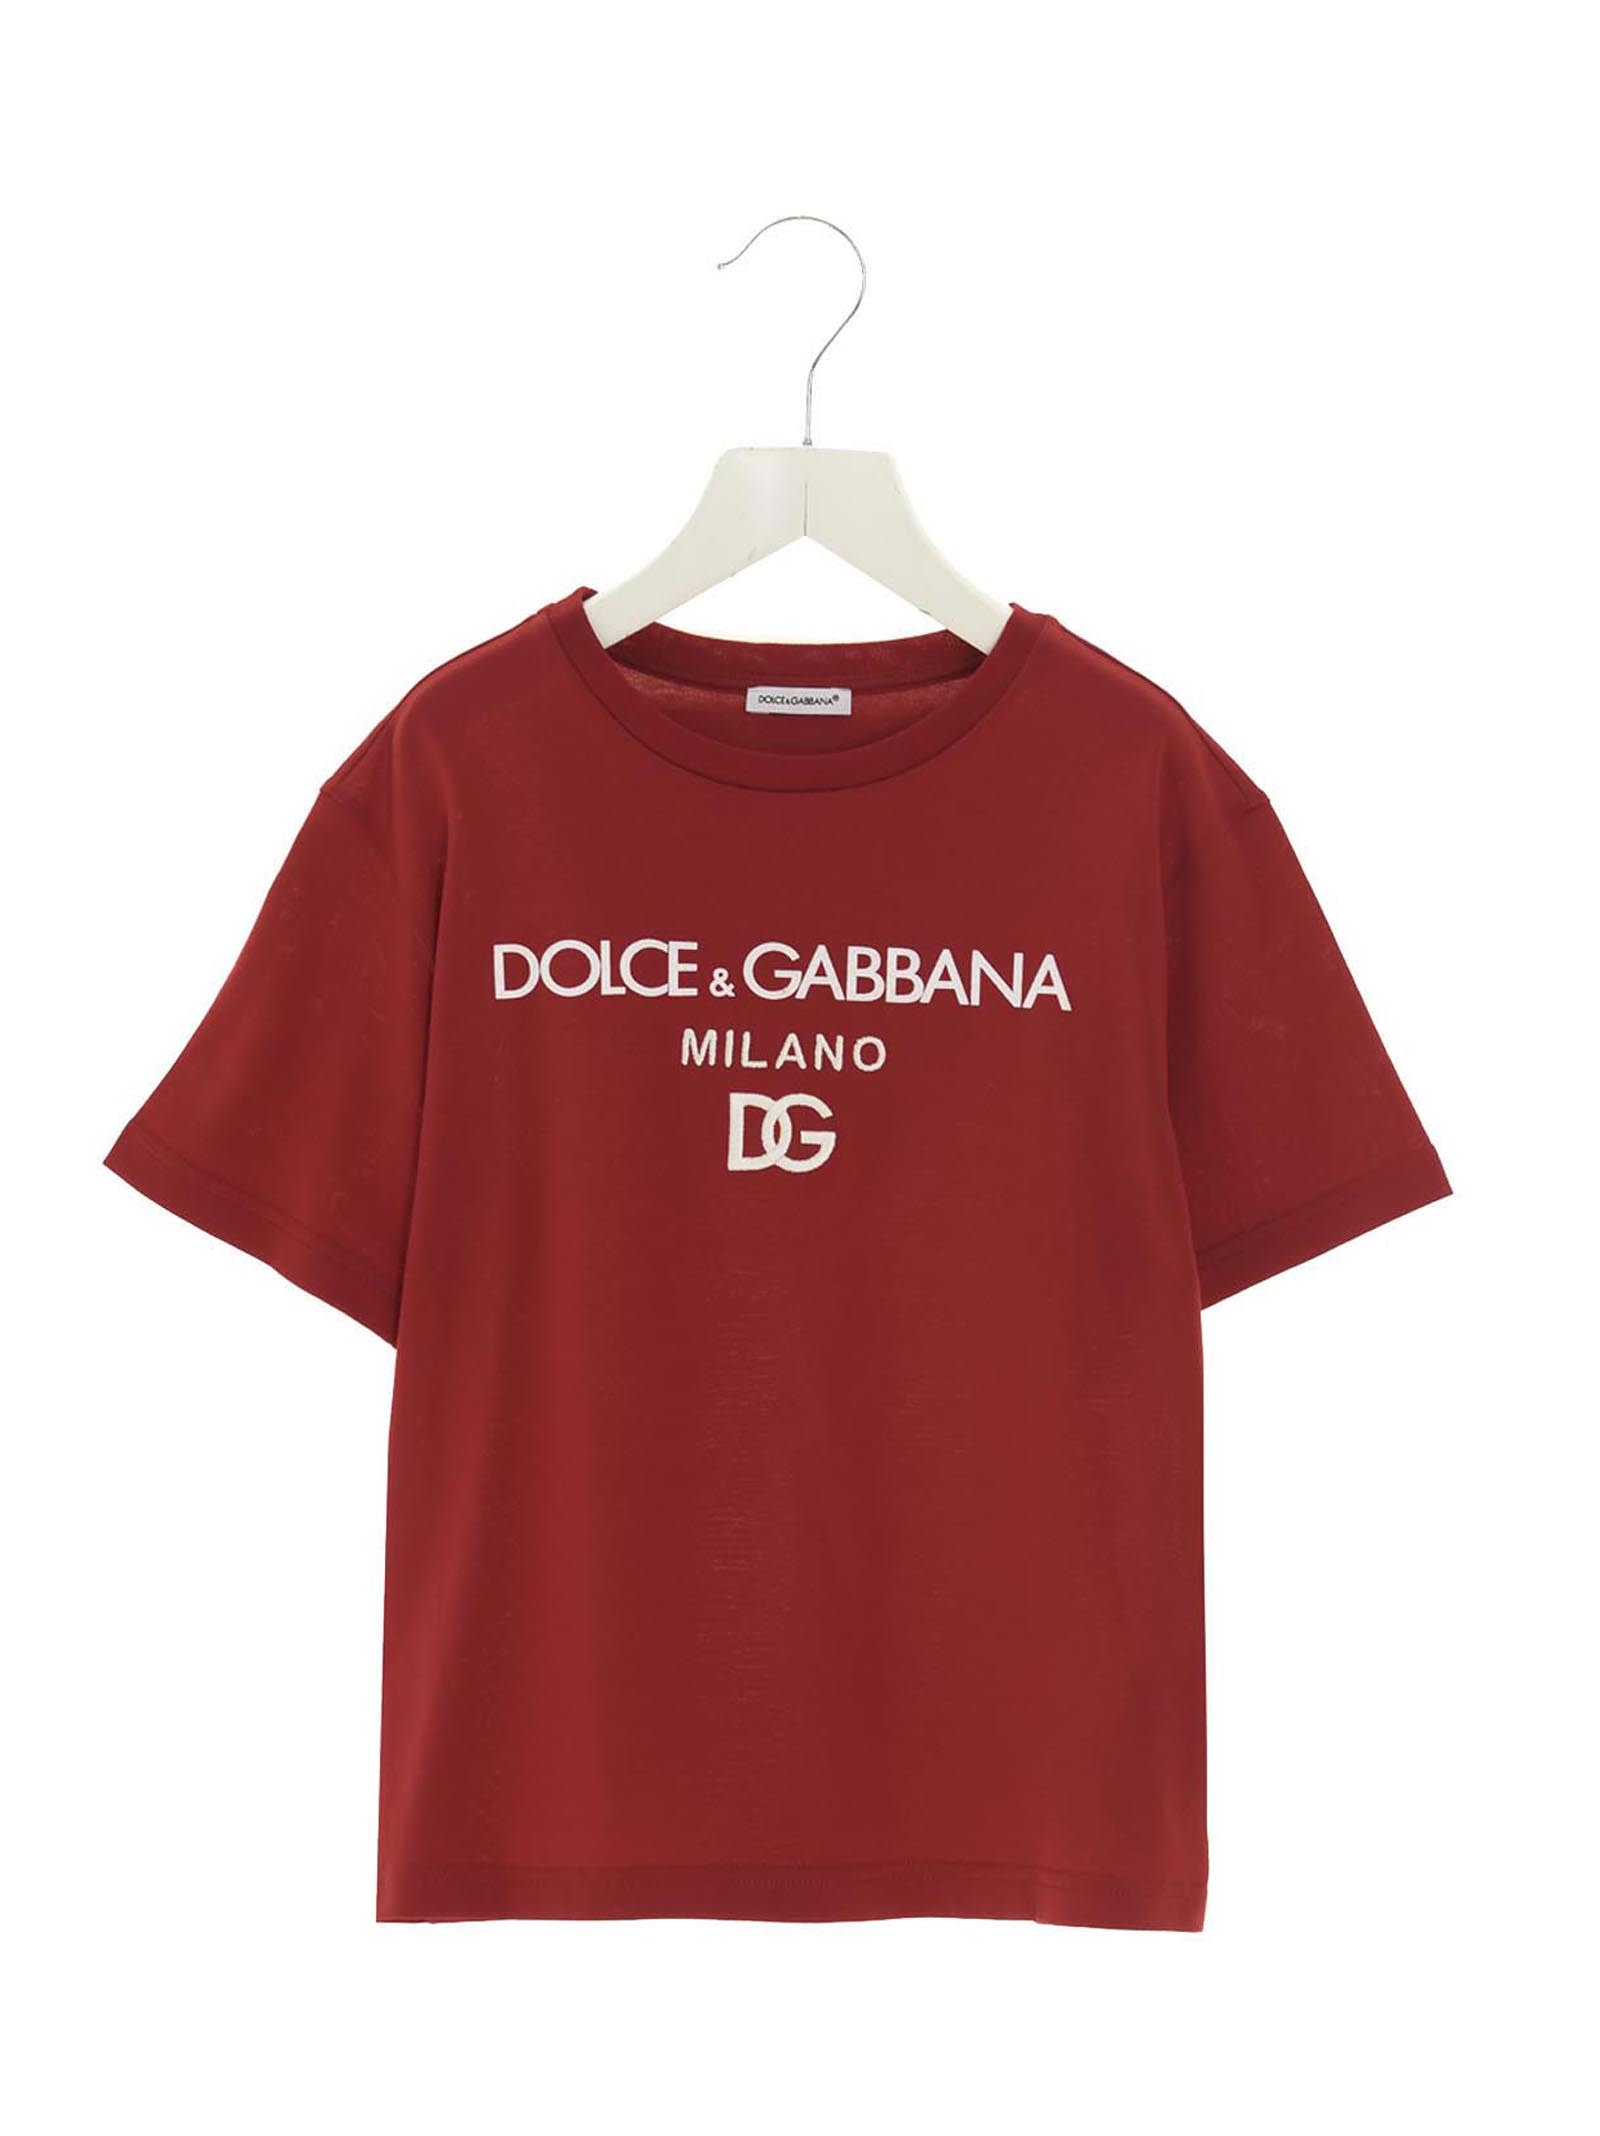 Dolce & Gabbana essential T-shirt